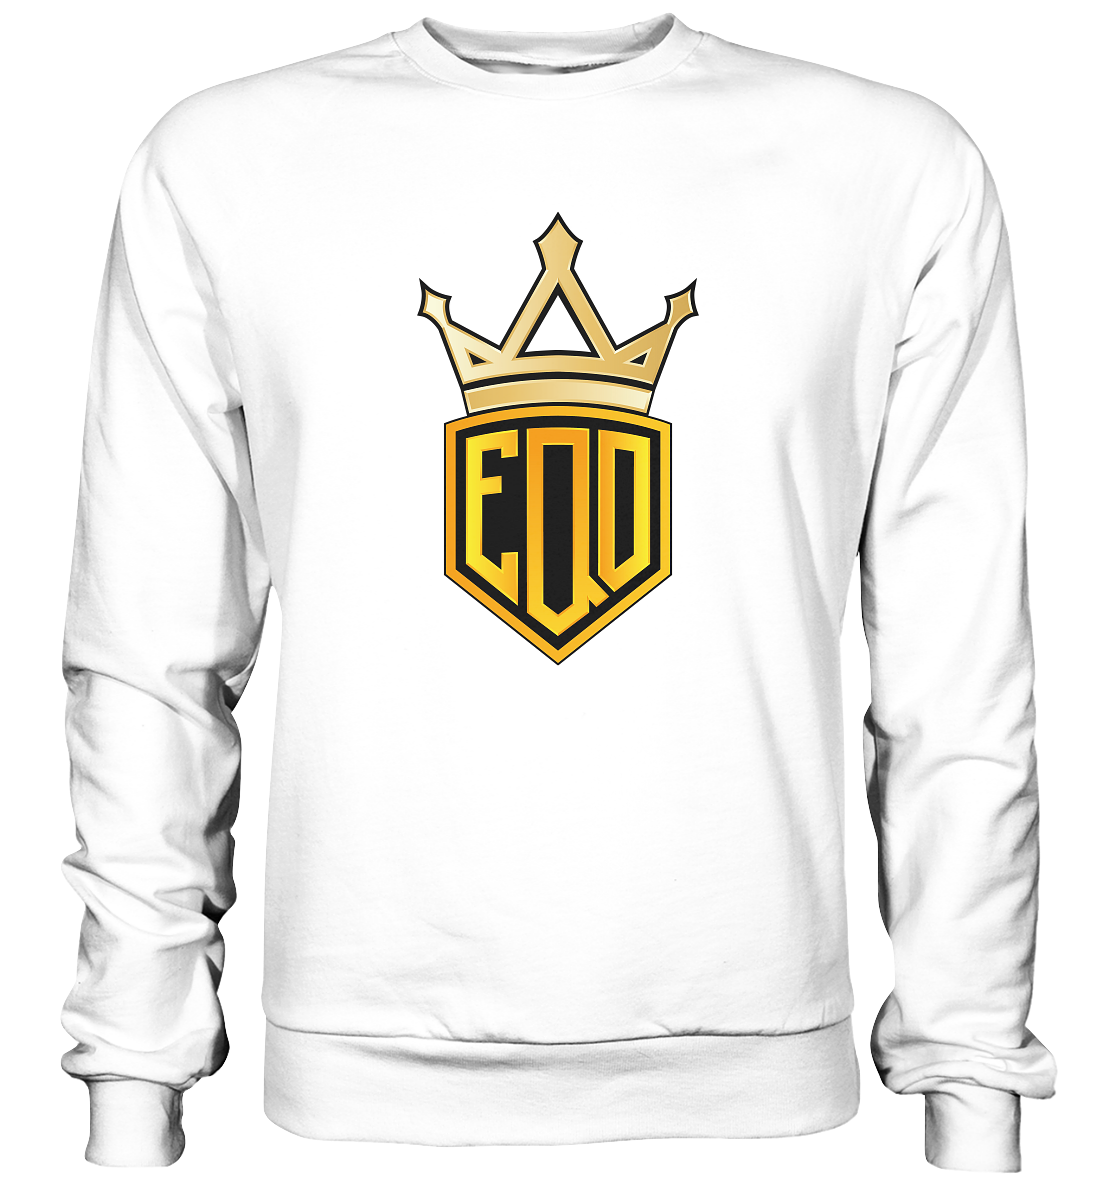 EQD - Basic Sweatshirt